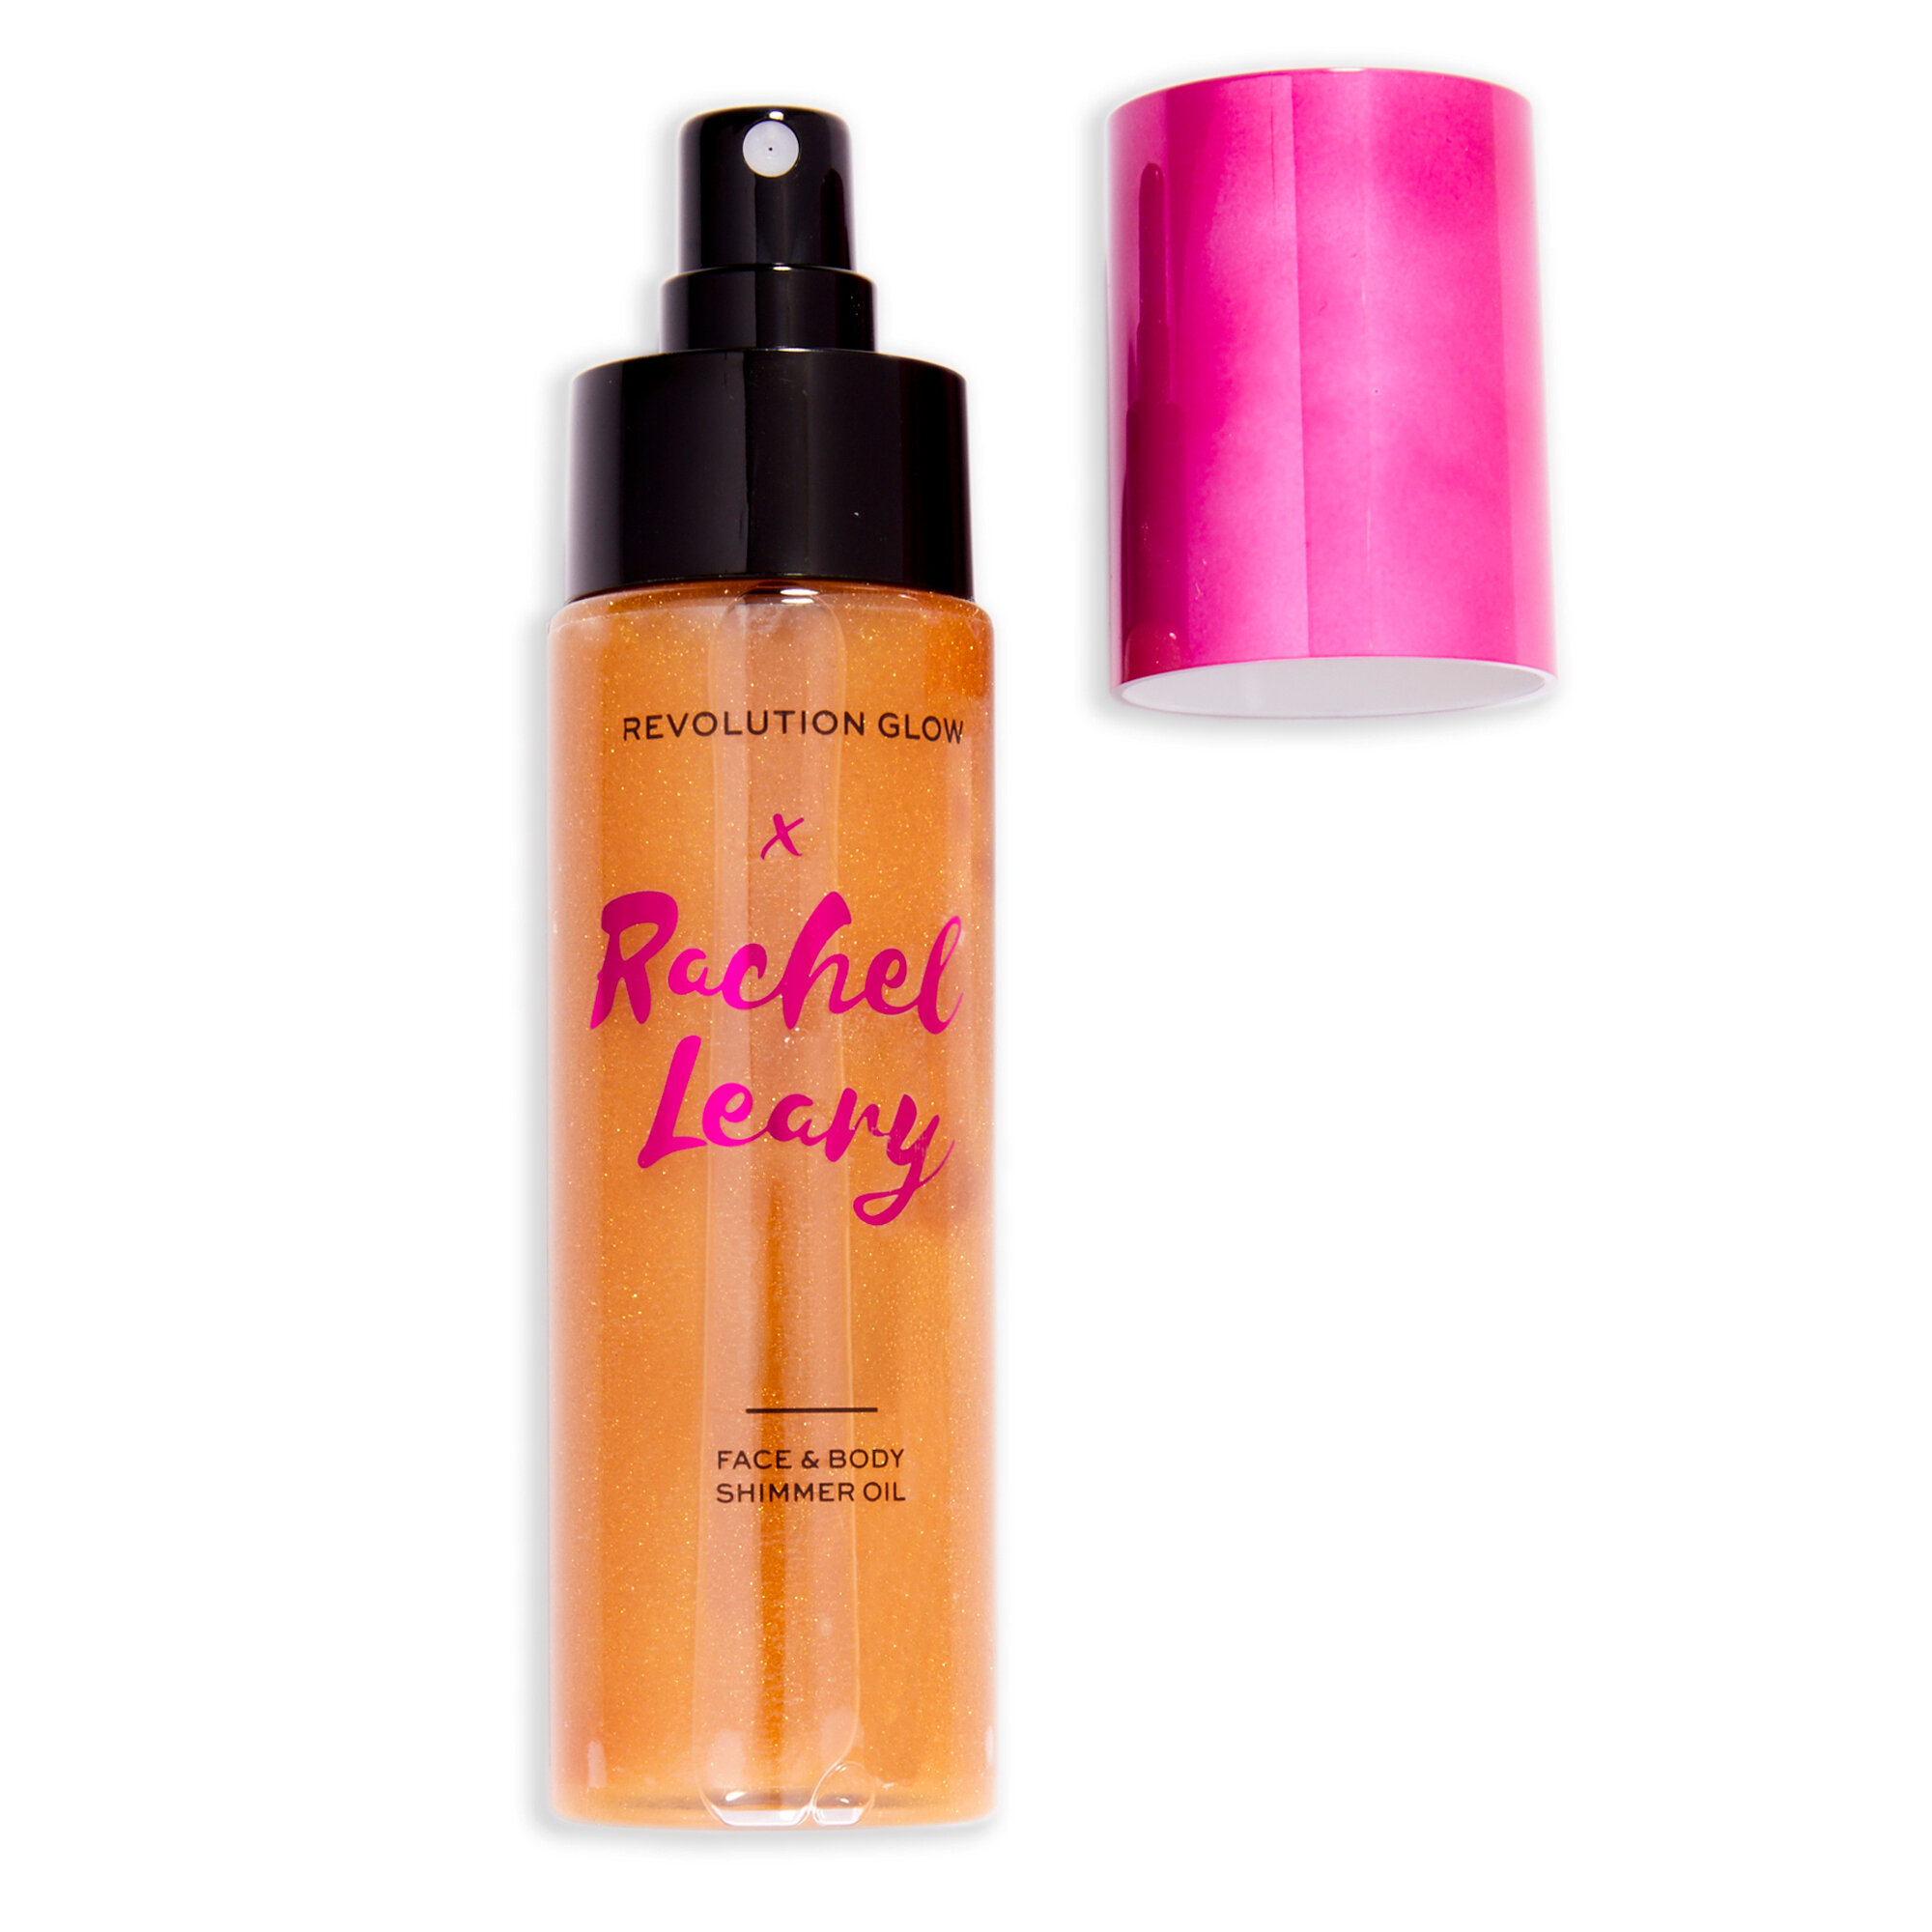 Makeup Revolution Glow X Rachel Leary Shimmer Oil